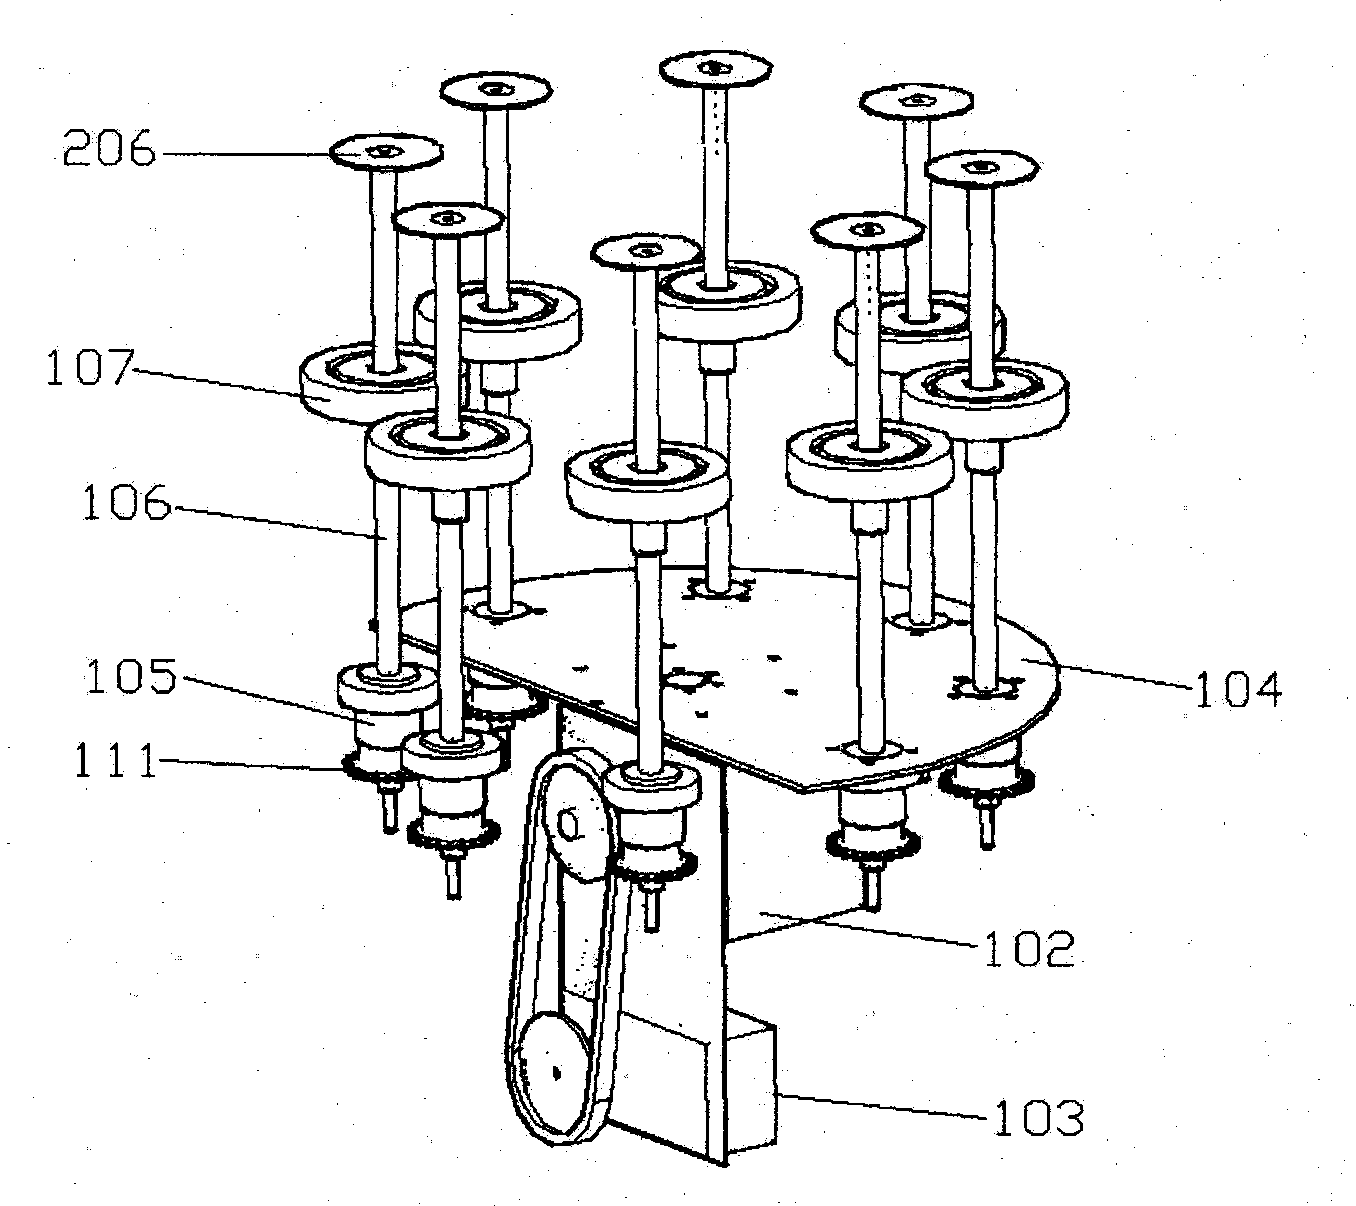 Circular-truncated-cone injection bonding machine